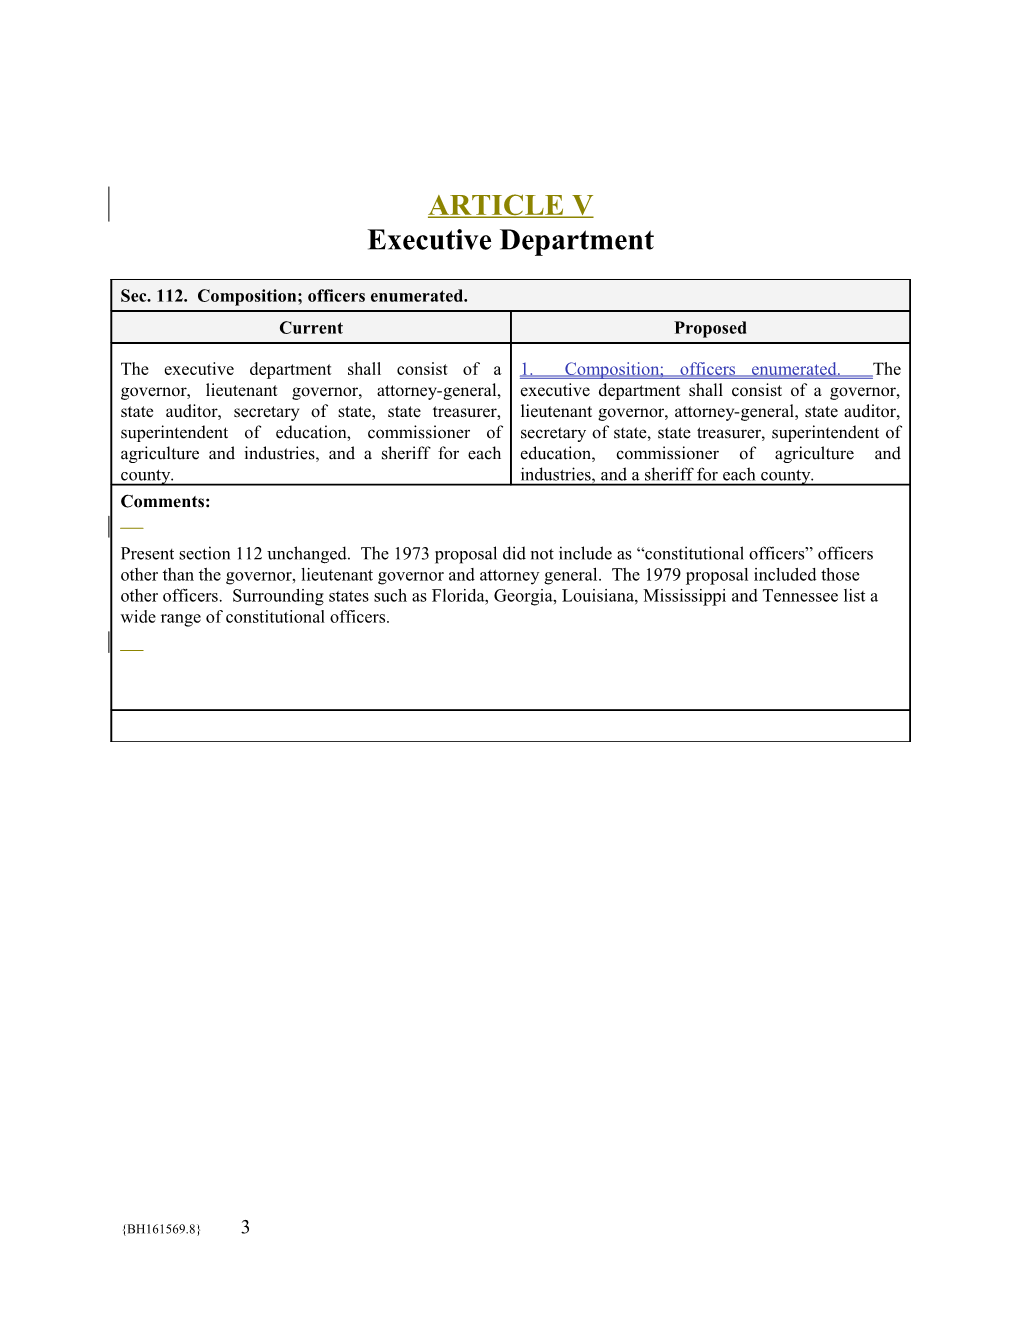 Article V. Executive Department